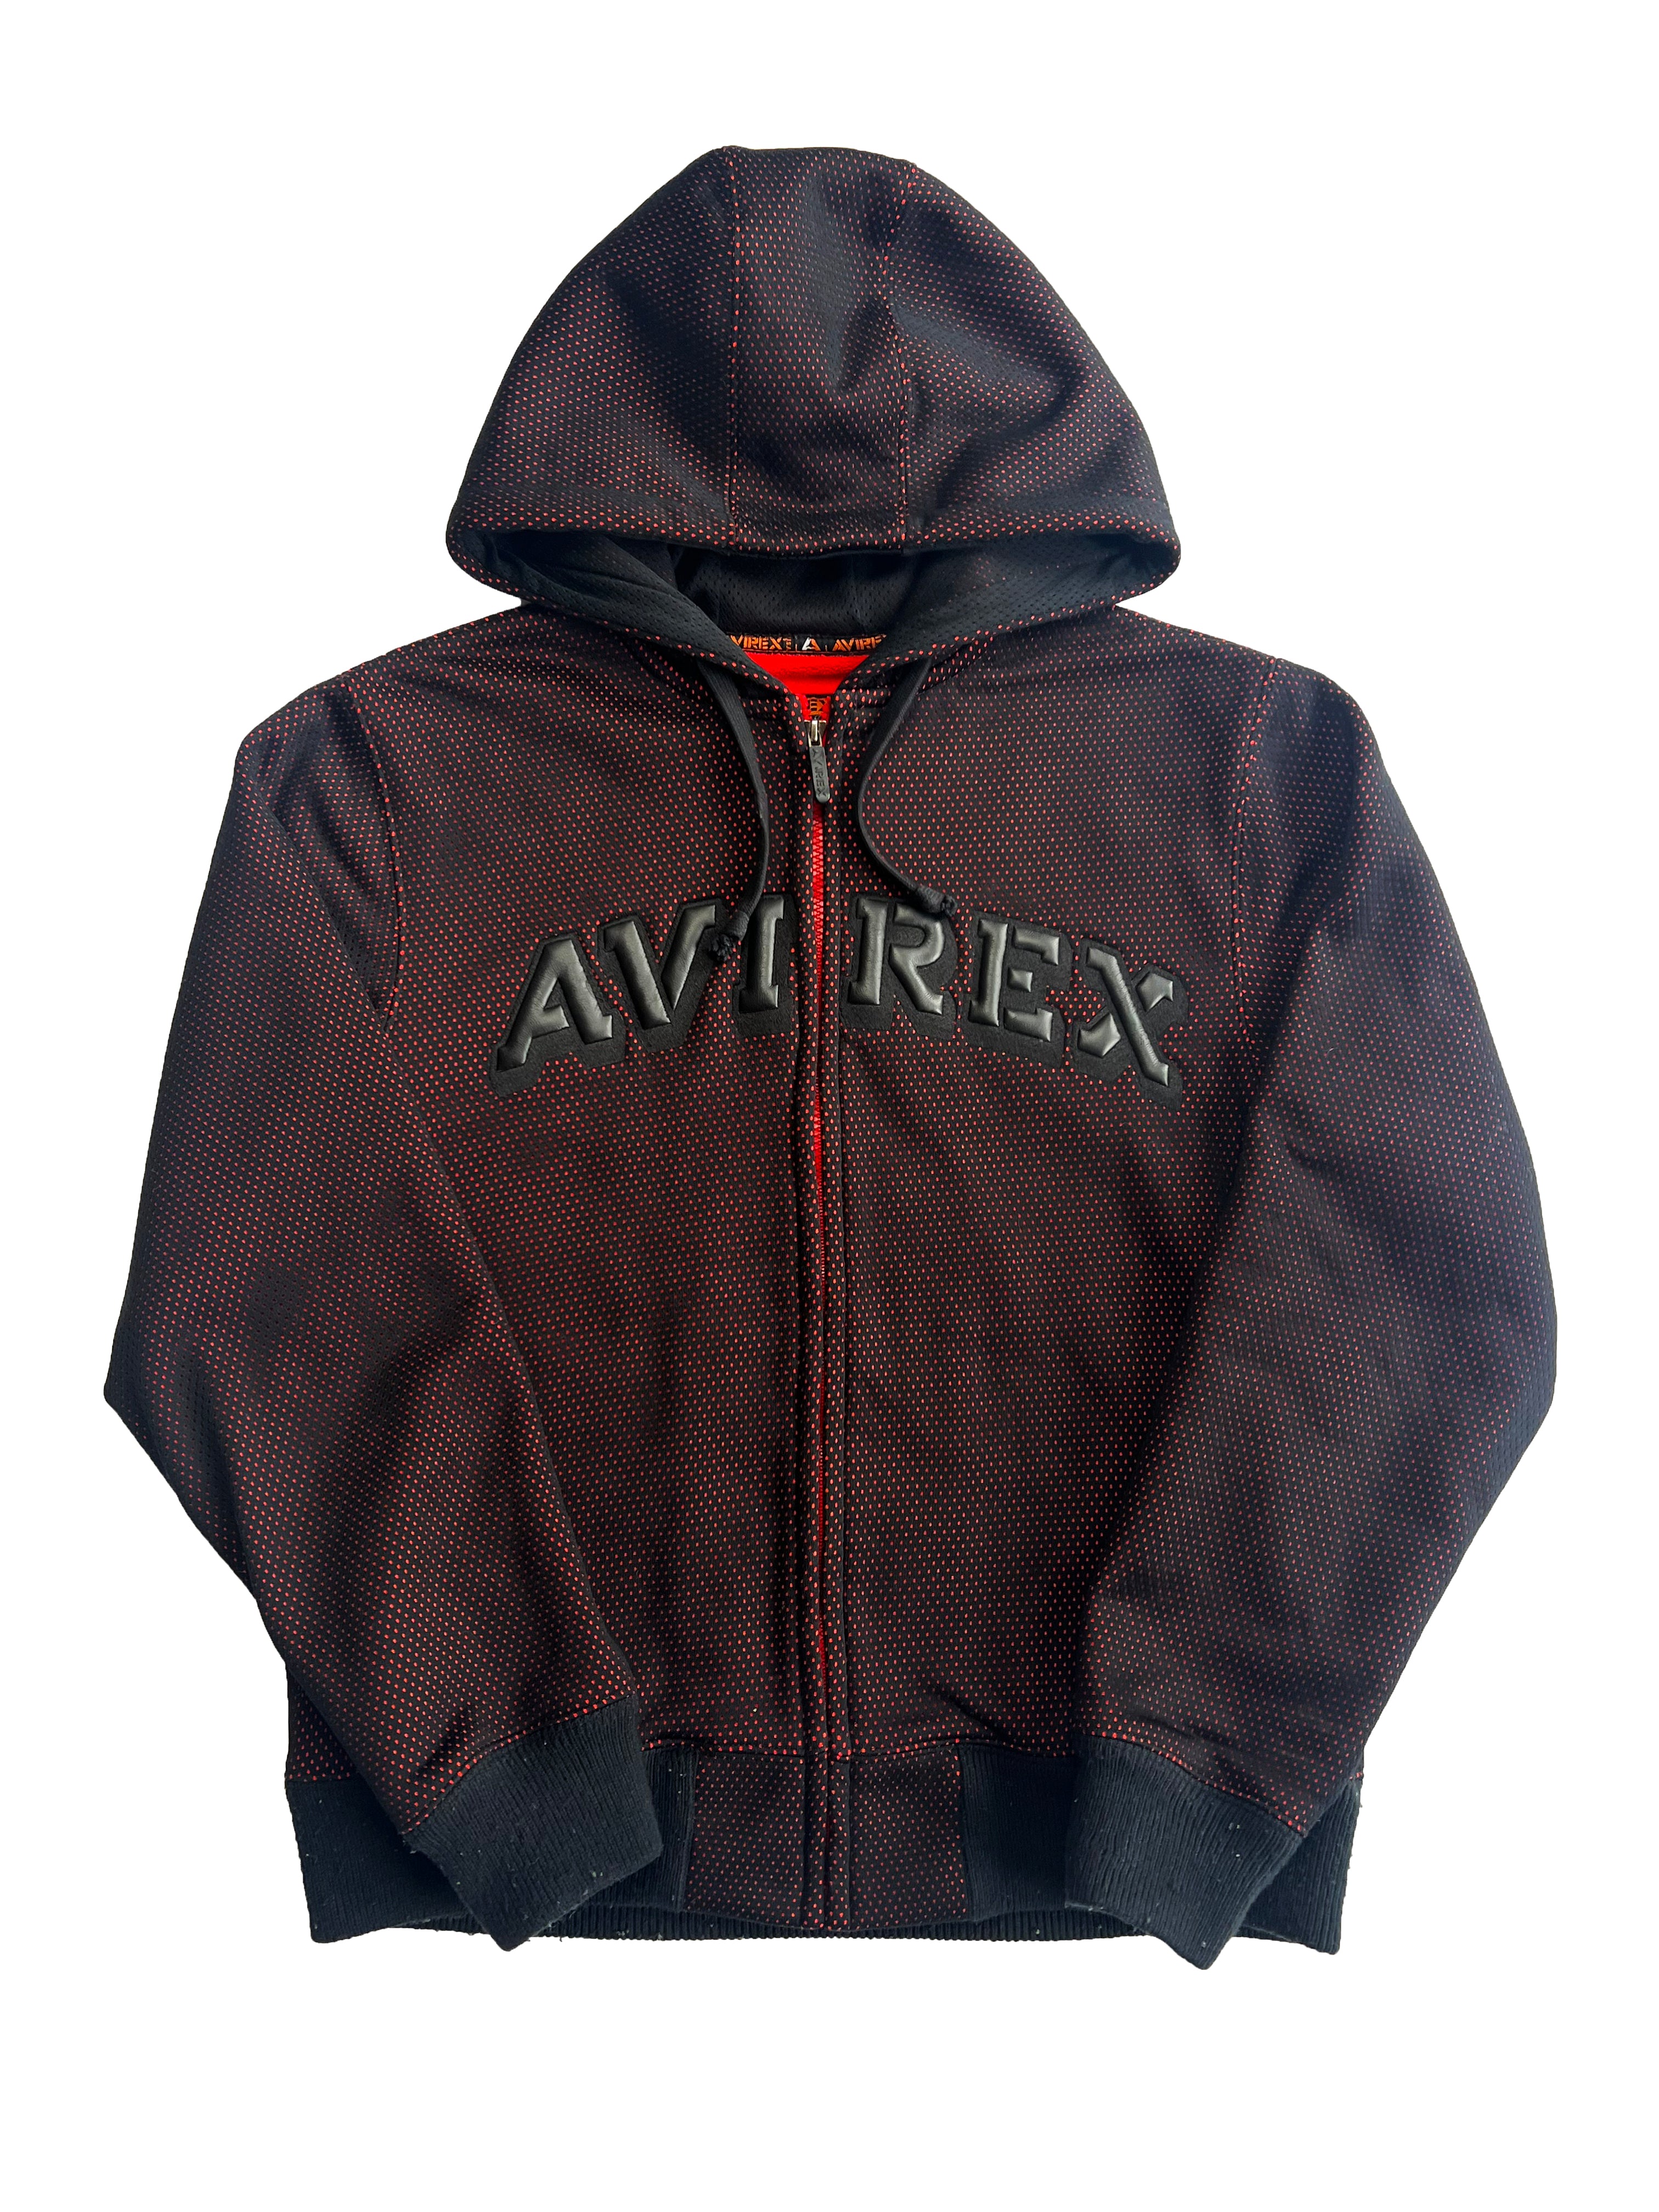 Avirex Perforated Black/Red Hoodie 00's